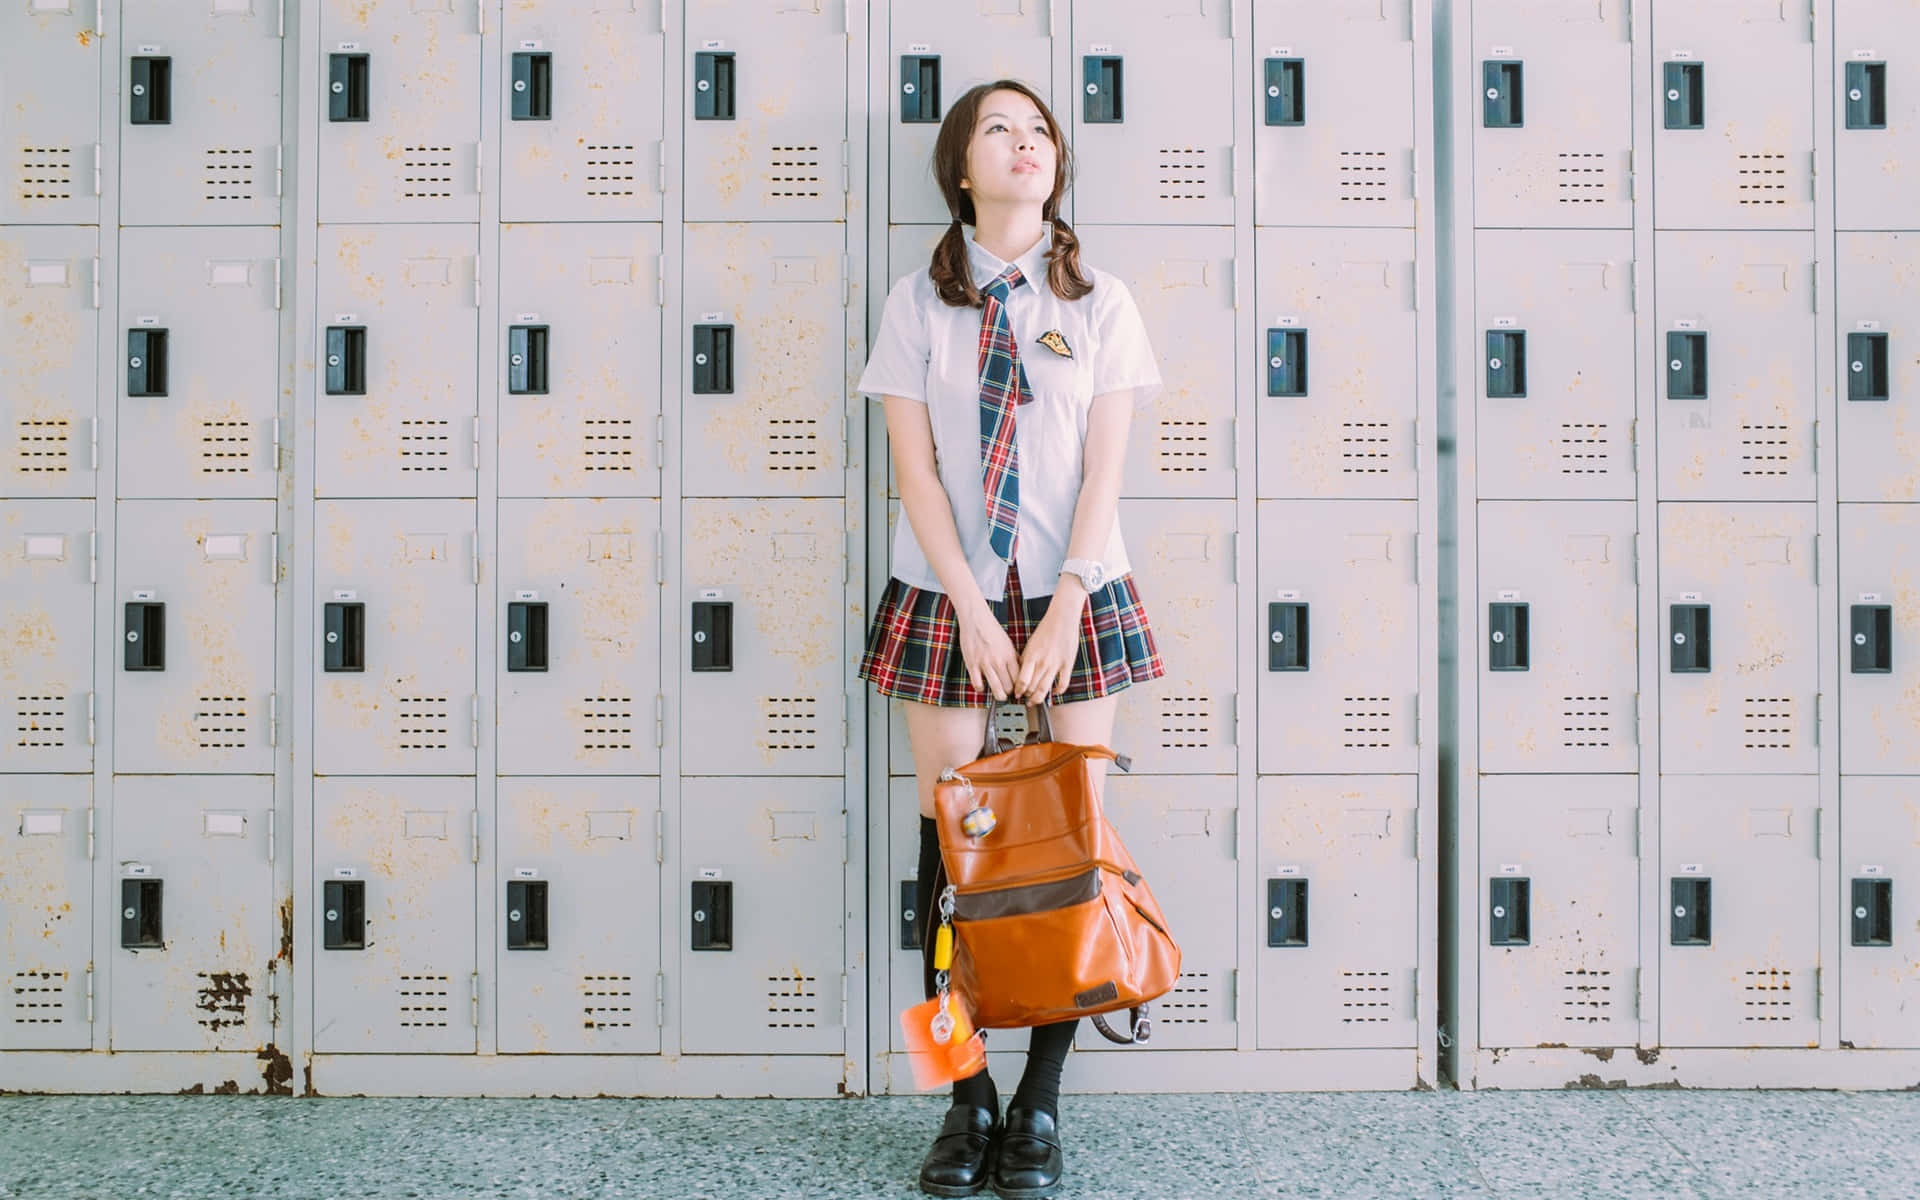 A Girl In School Uniform Standing In Front Of Lockers